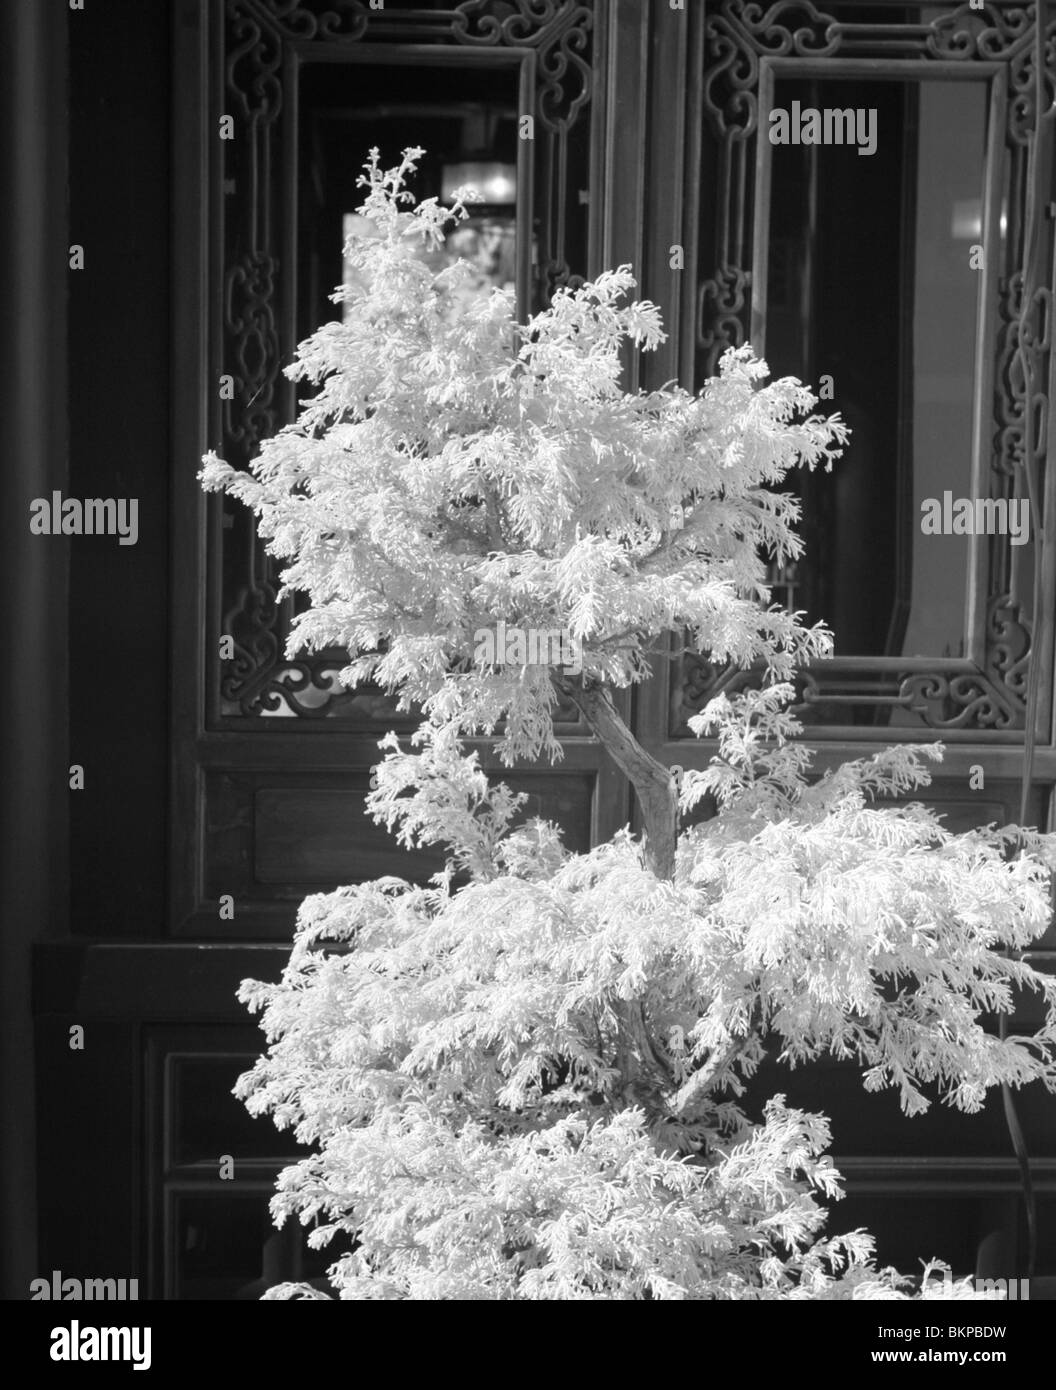 Portland Oregon Chinese Garden, Black and White Infrared Stock Photo